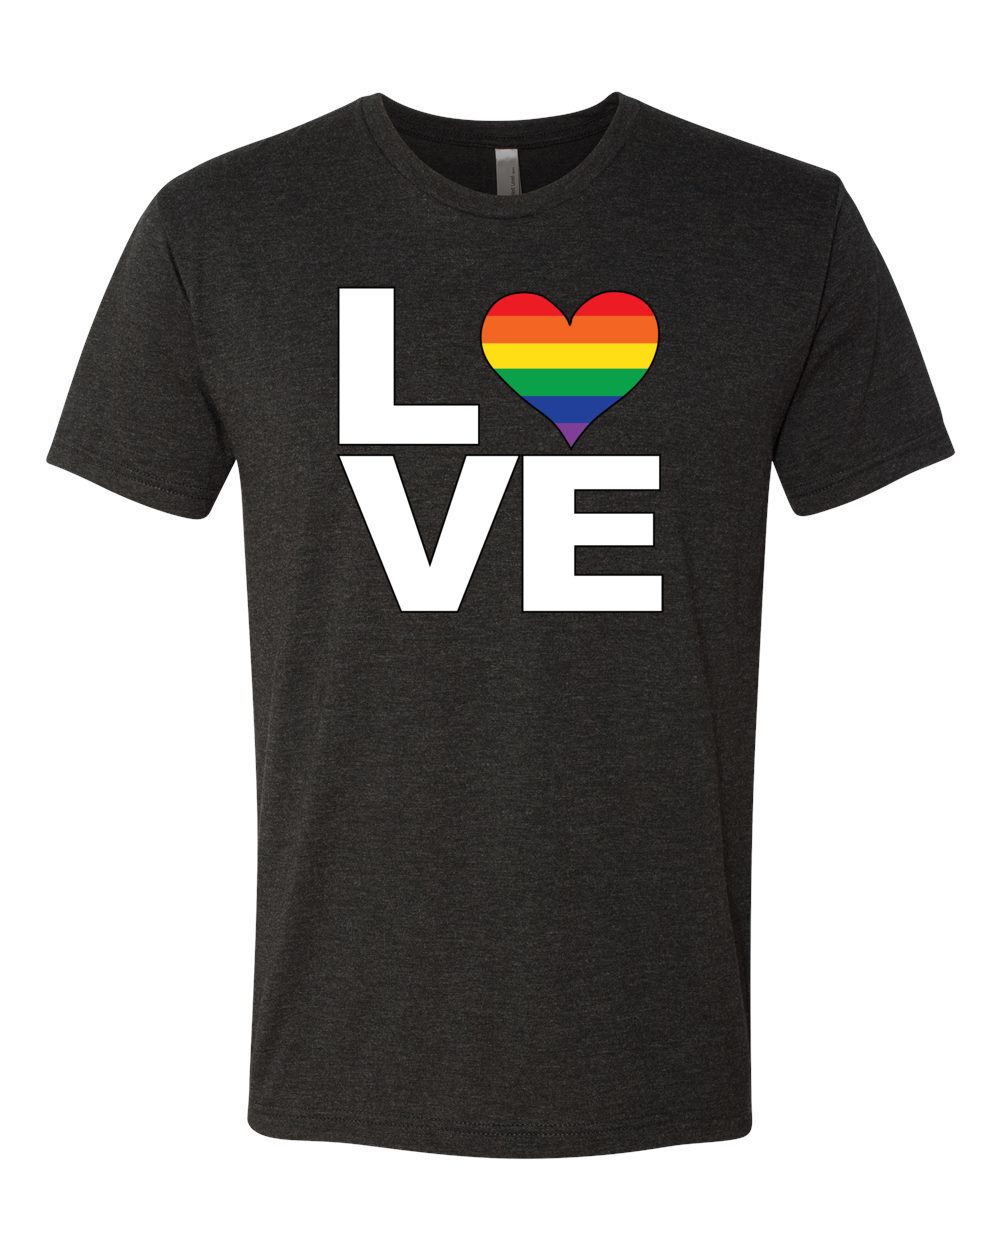 Love Heart LGBT Pride Soft Premium T Shirt Gay Lesbian Proud Tee | eBay